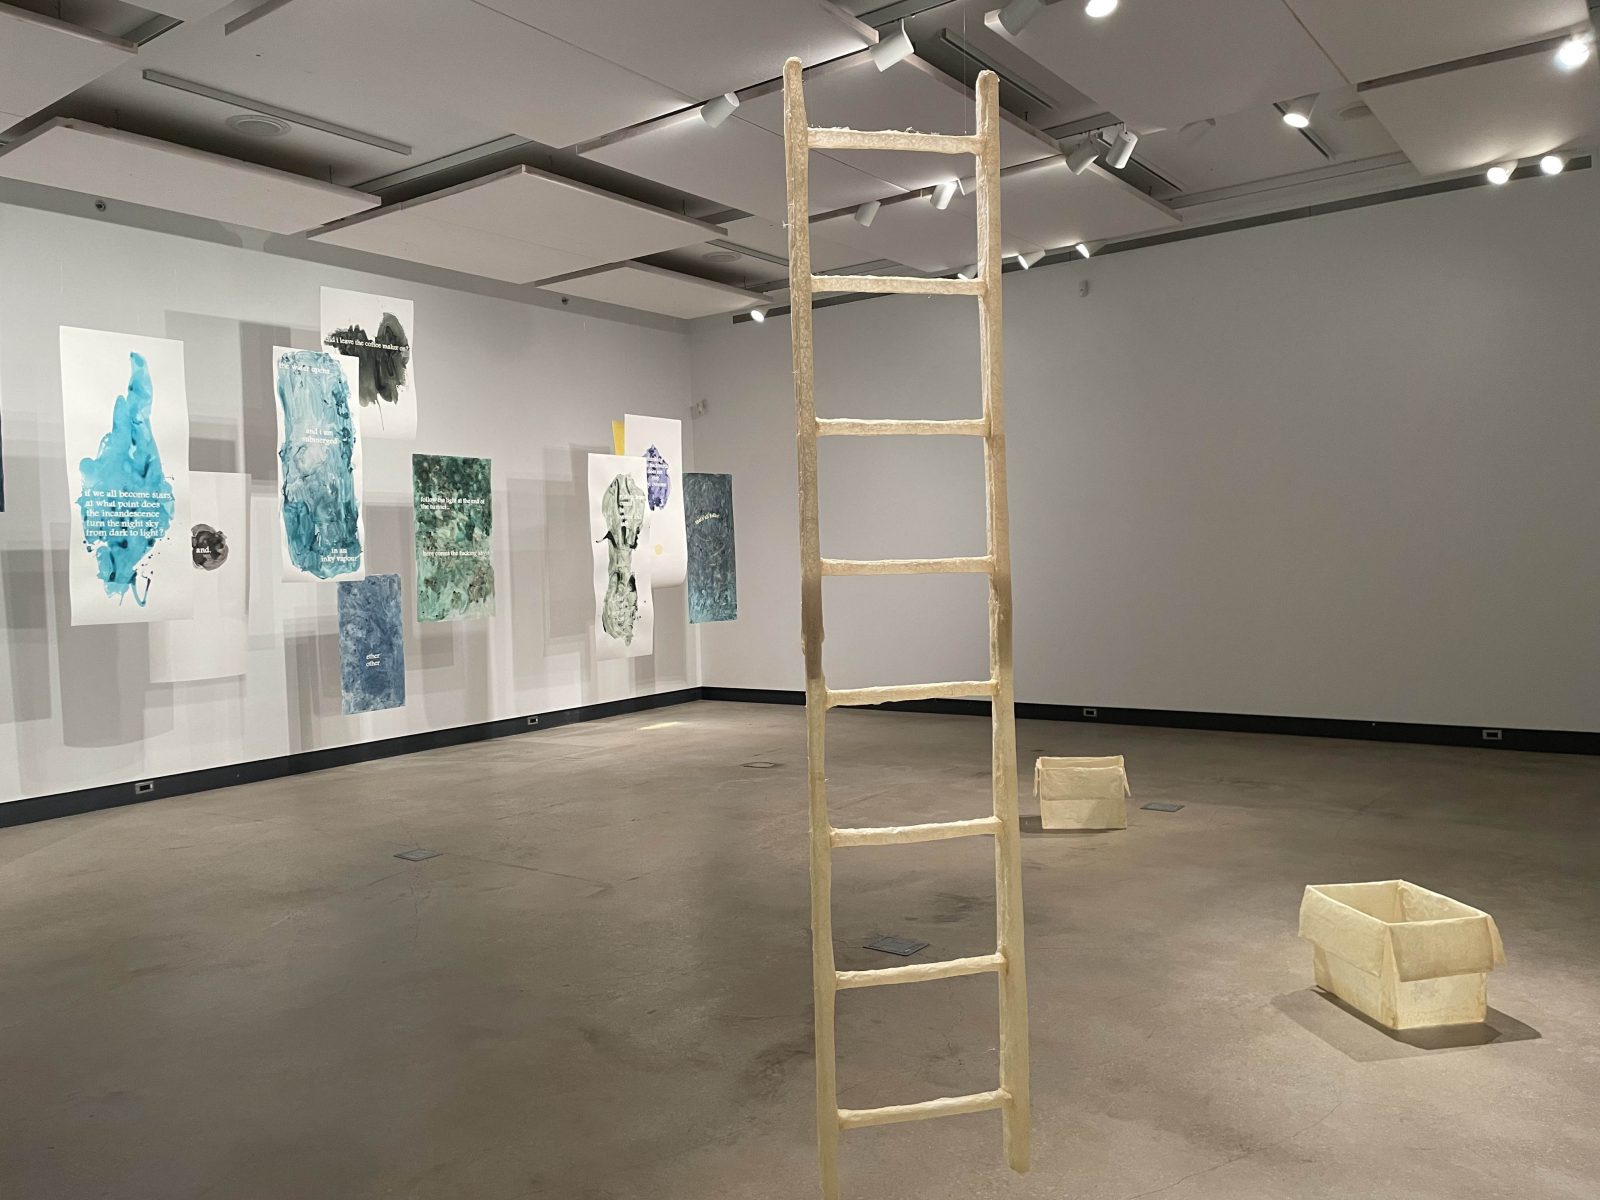 Artwork shaped like a ladder hangs in an art exhibition.